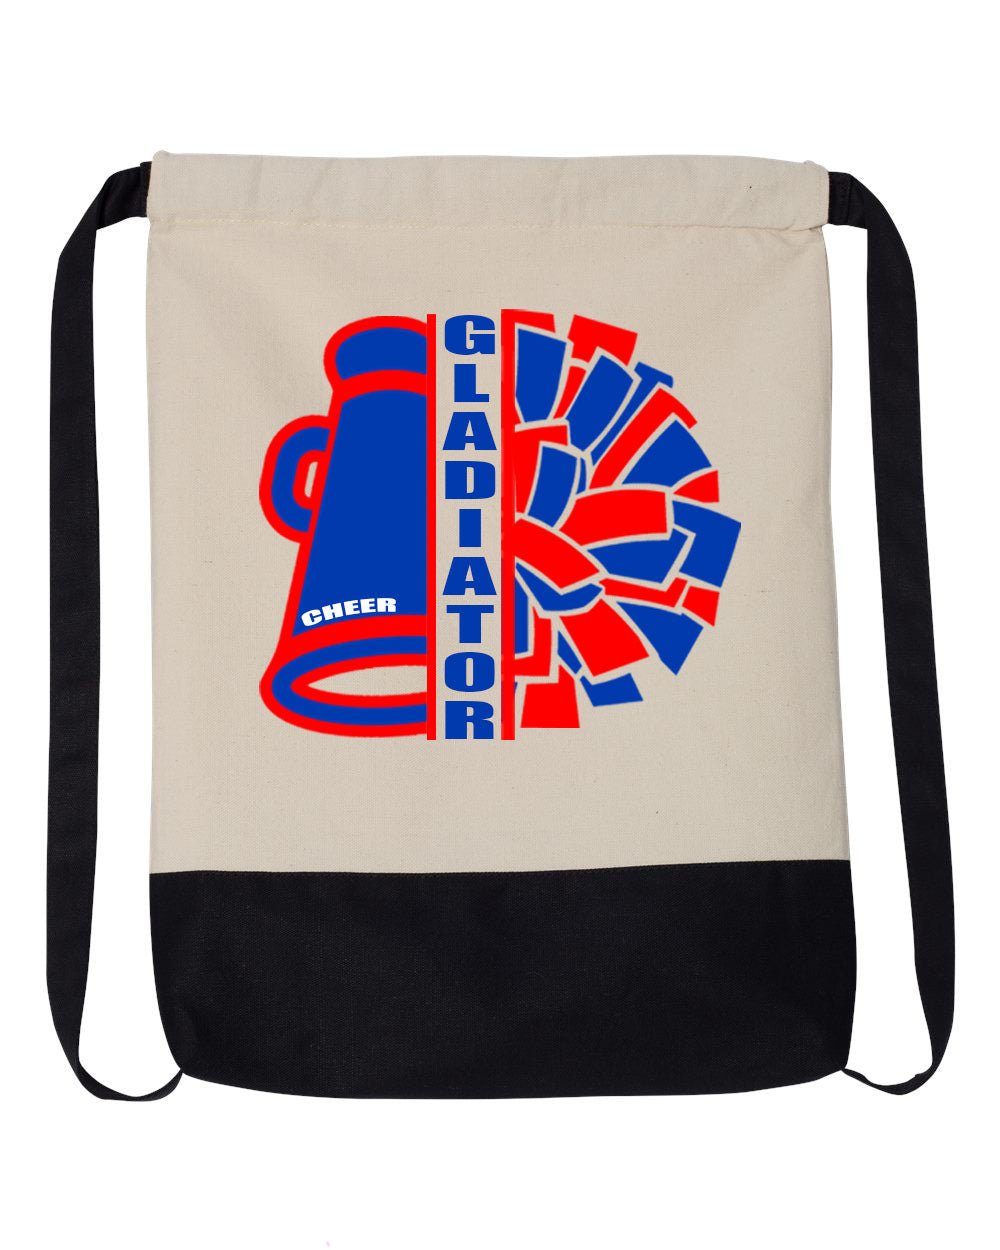 Goshen Cheer design 10 Drawstring Bag